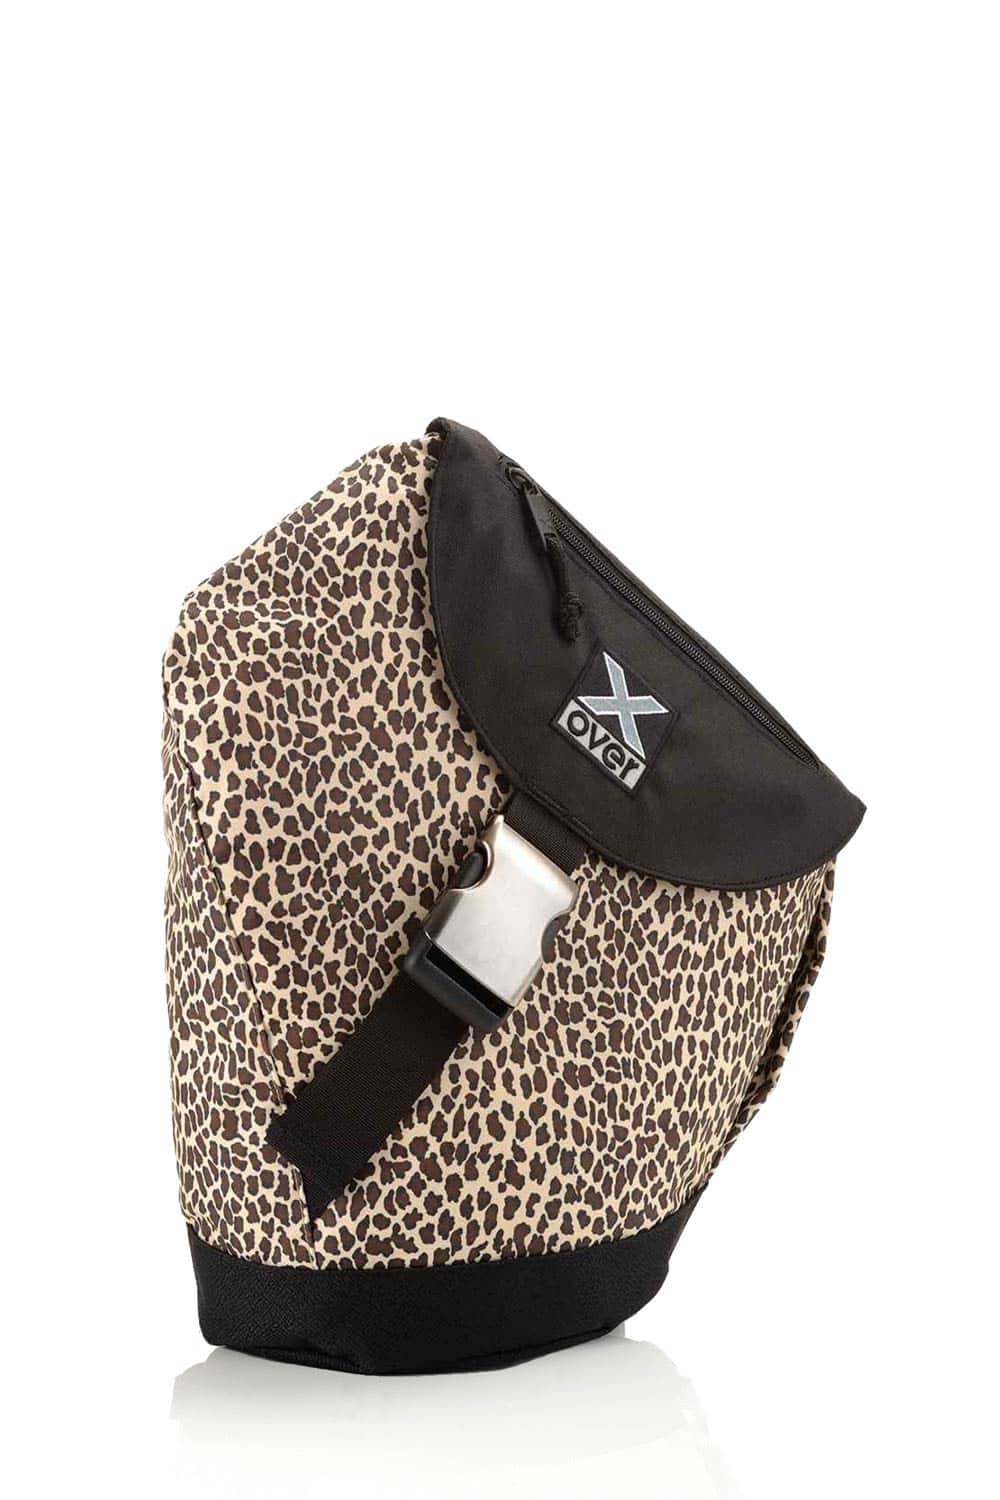 X-over Barcelona bag in color wild leopard